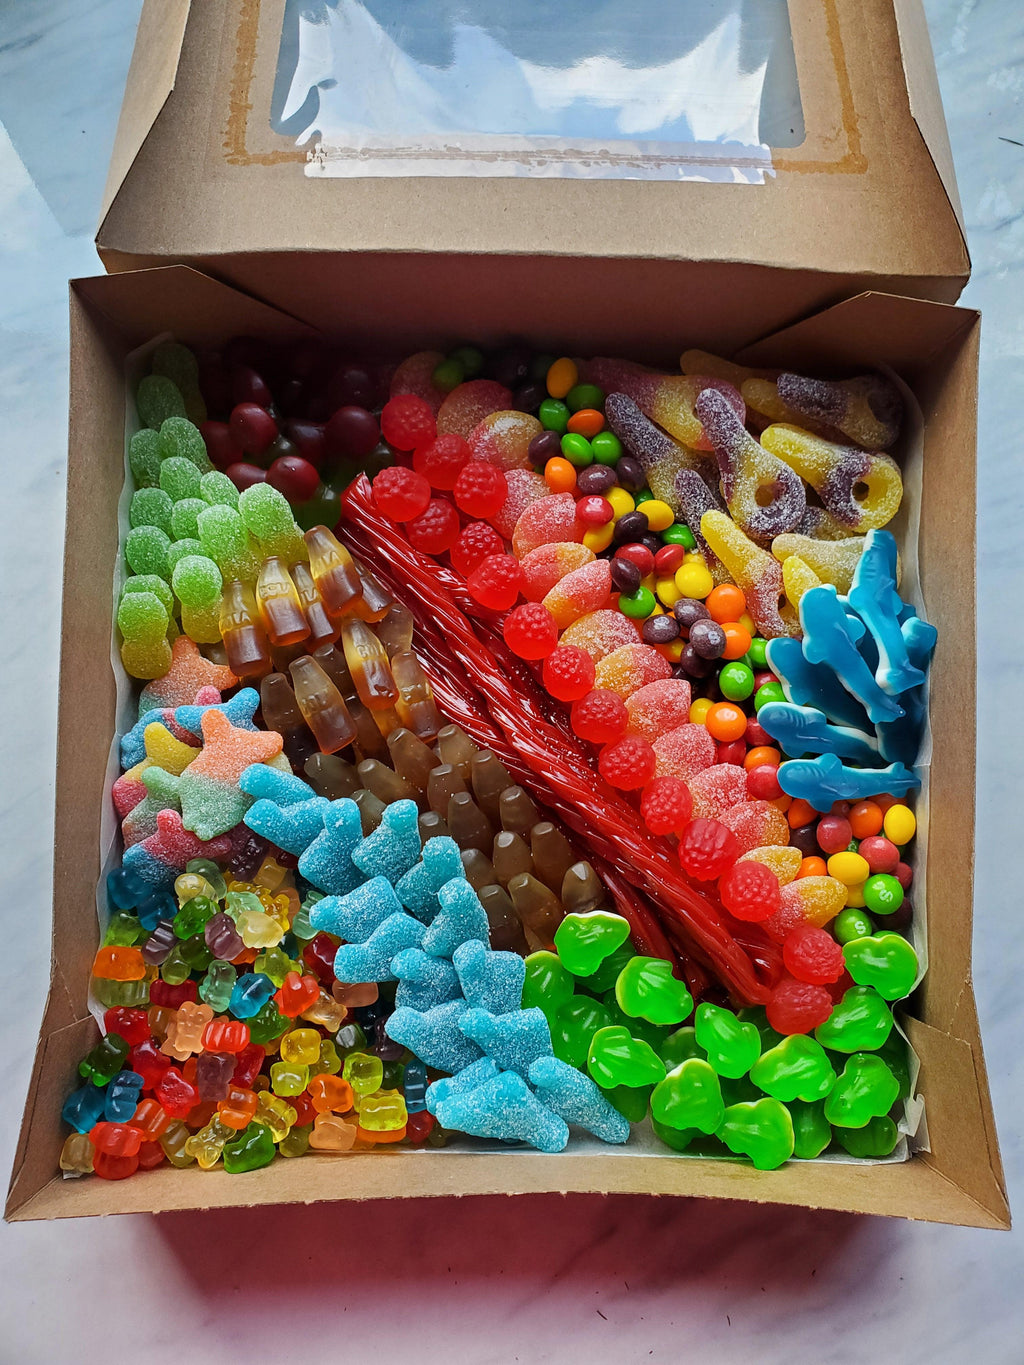 #5 Yummy Box - Temptation Box